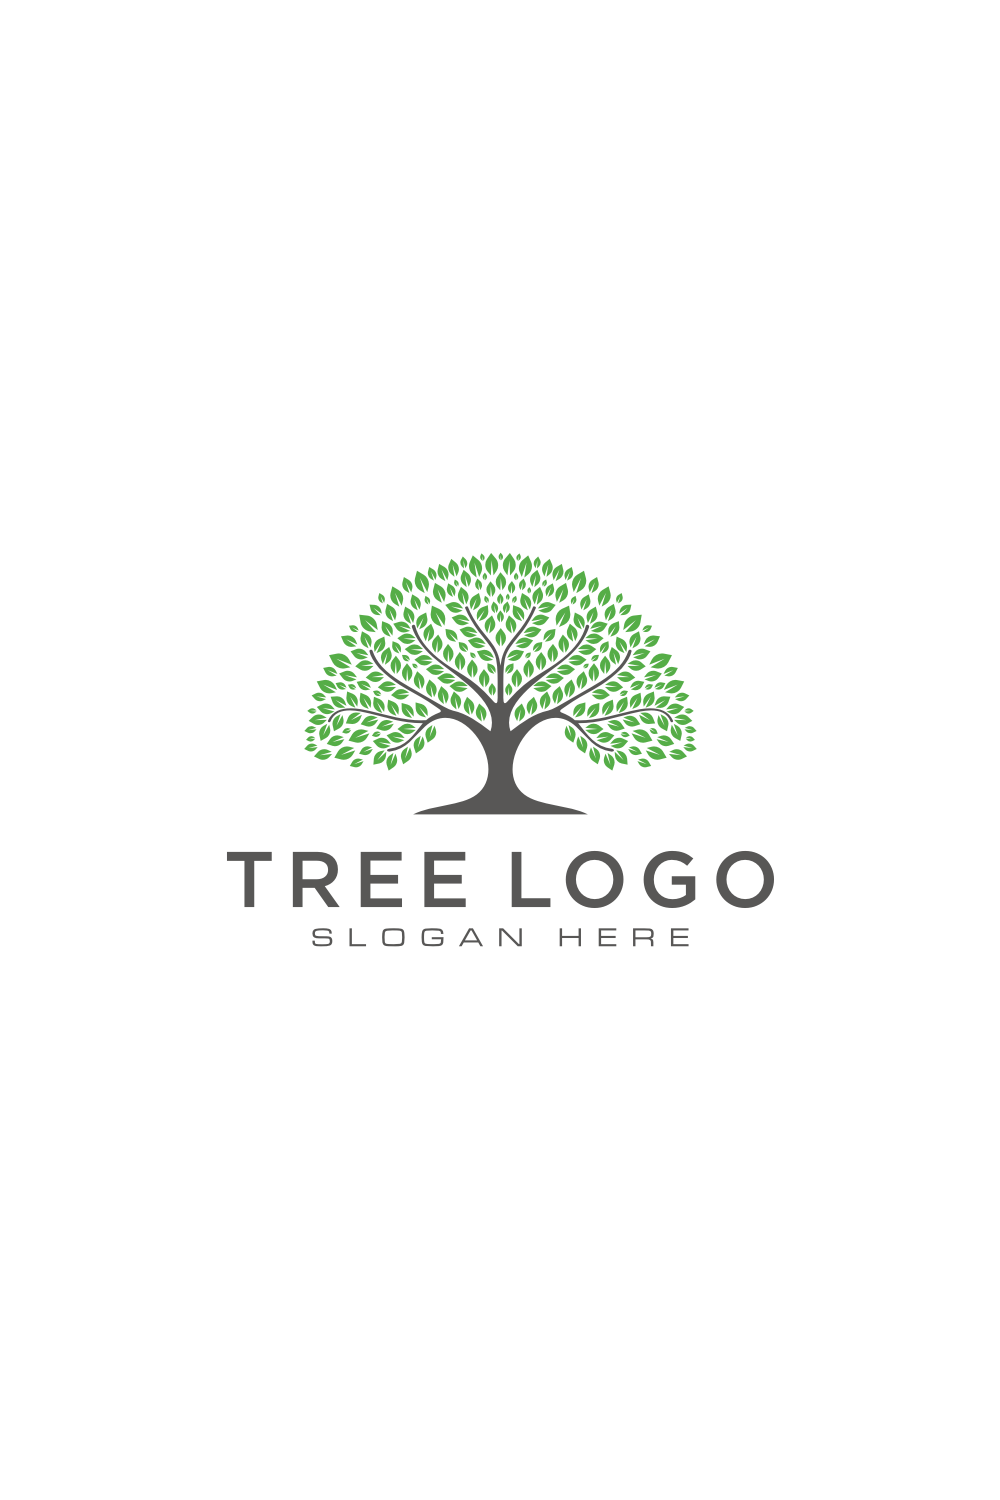 Tree Logo Design Template pinterest image.